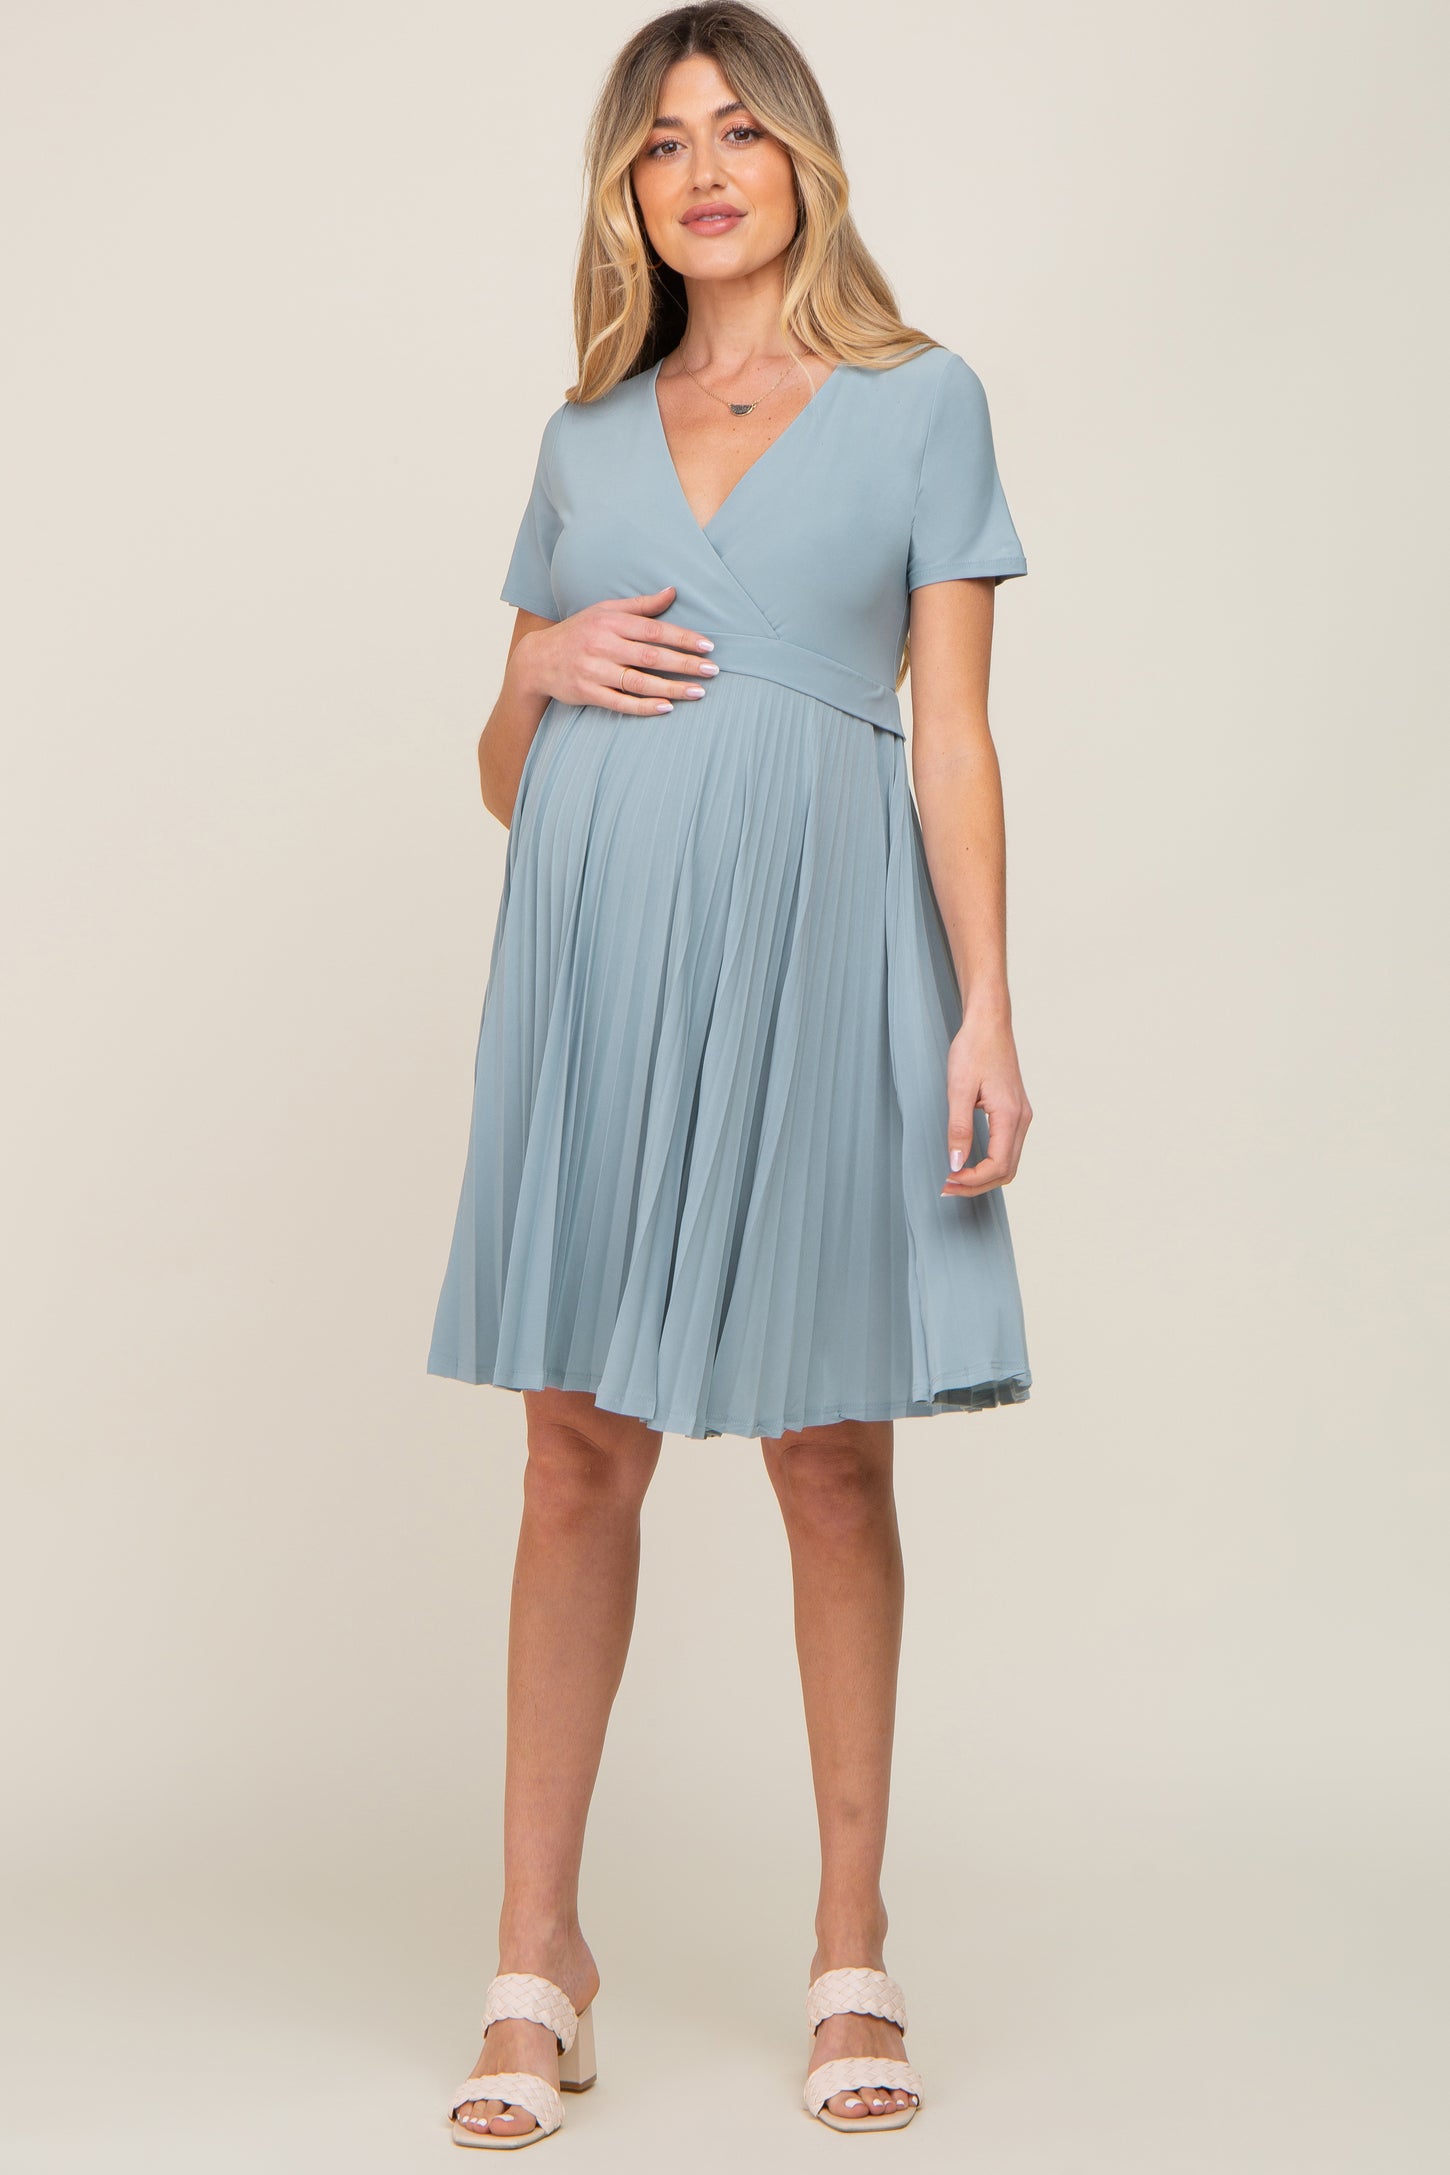 Mint Pleated Maternity/Nursing Dress